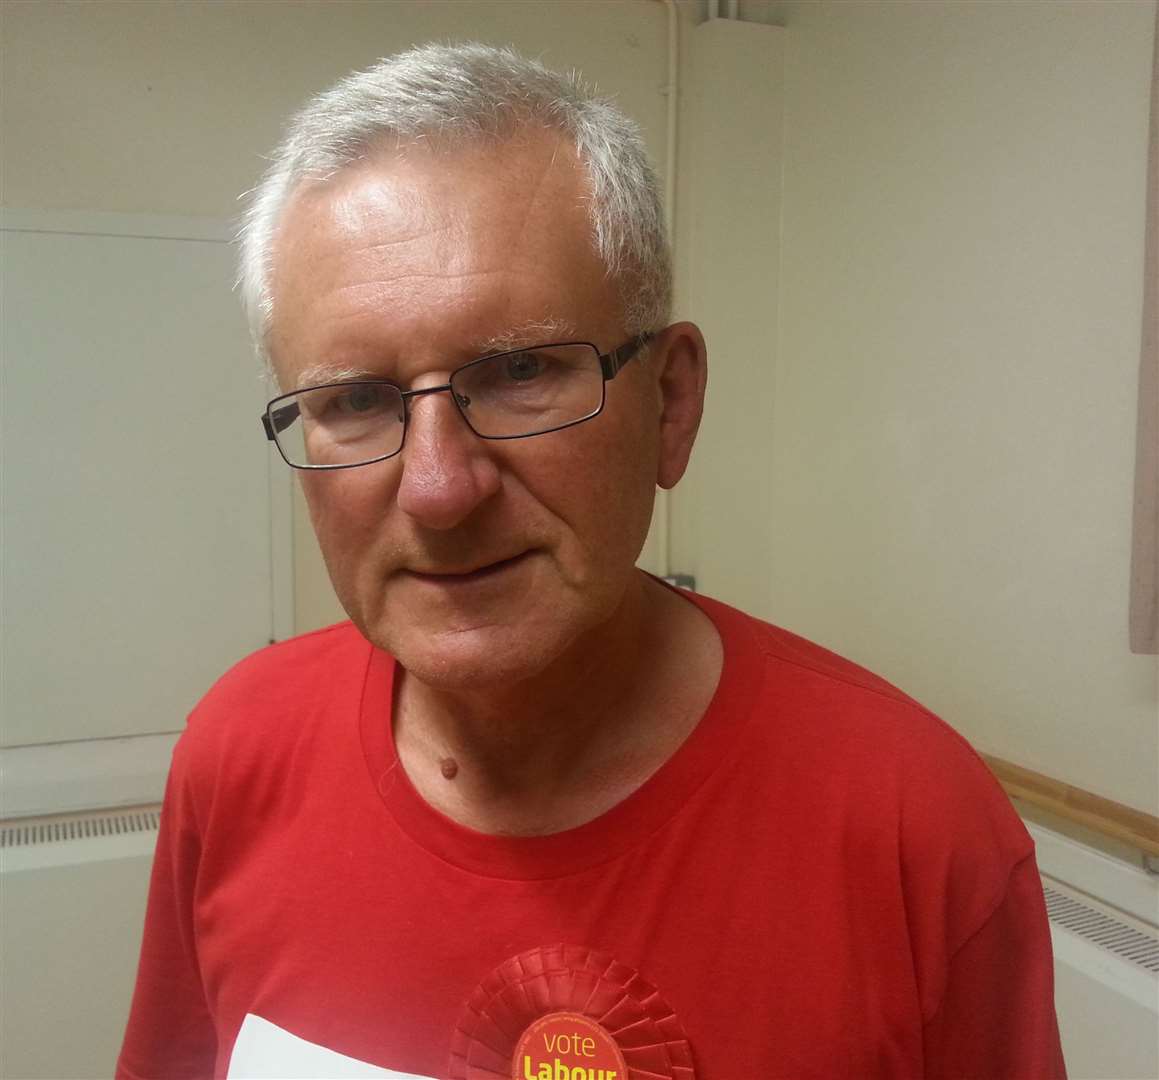 Former councillor Keith Adkinson has also been suspended